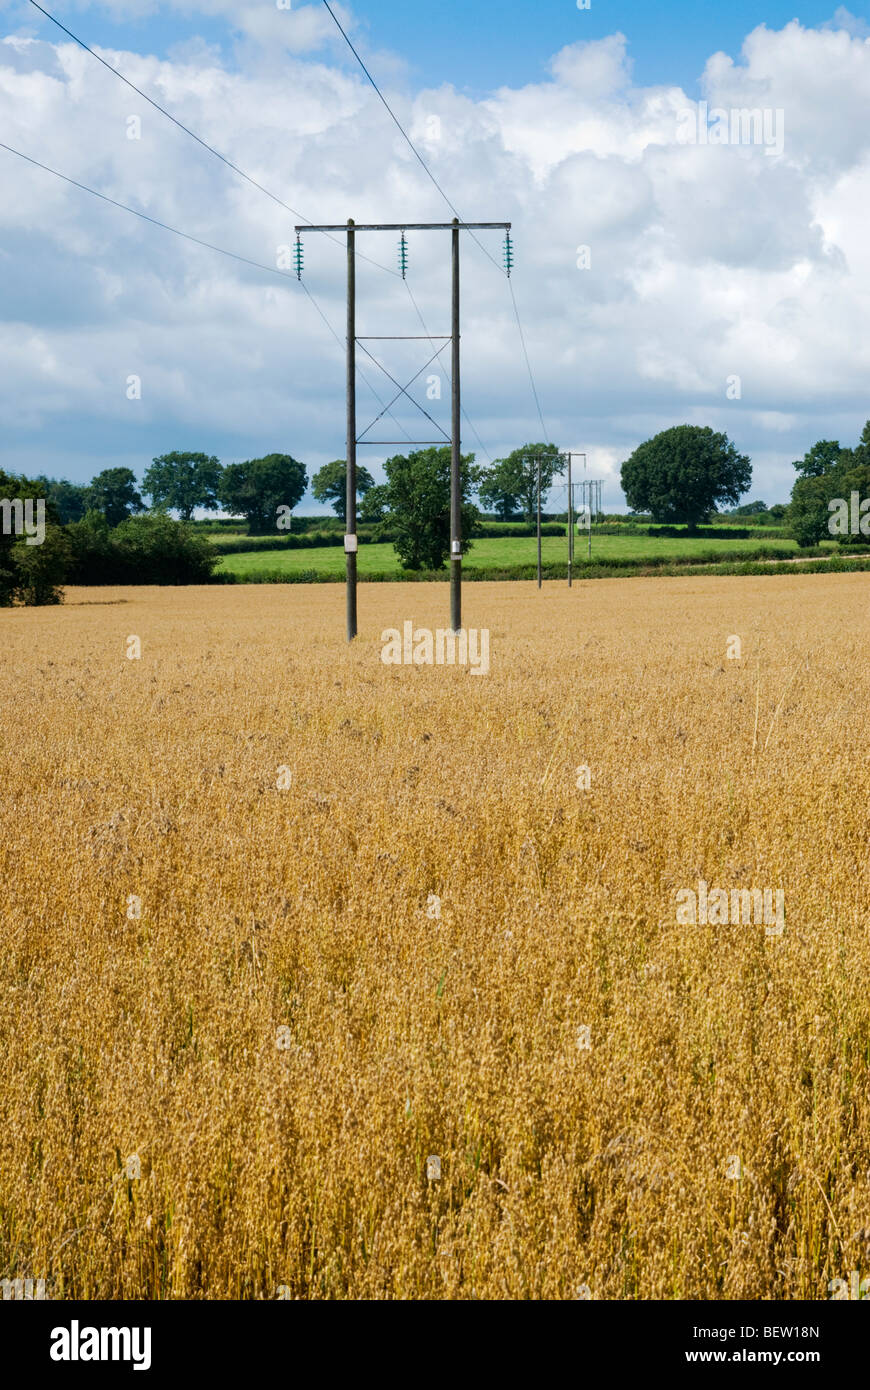 Electricity pylon in Herefordshire cornfield Stock Photo